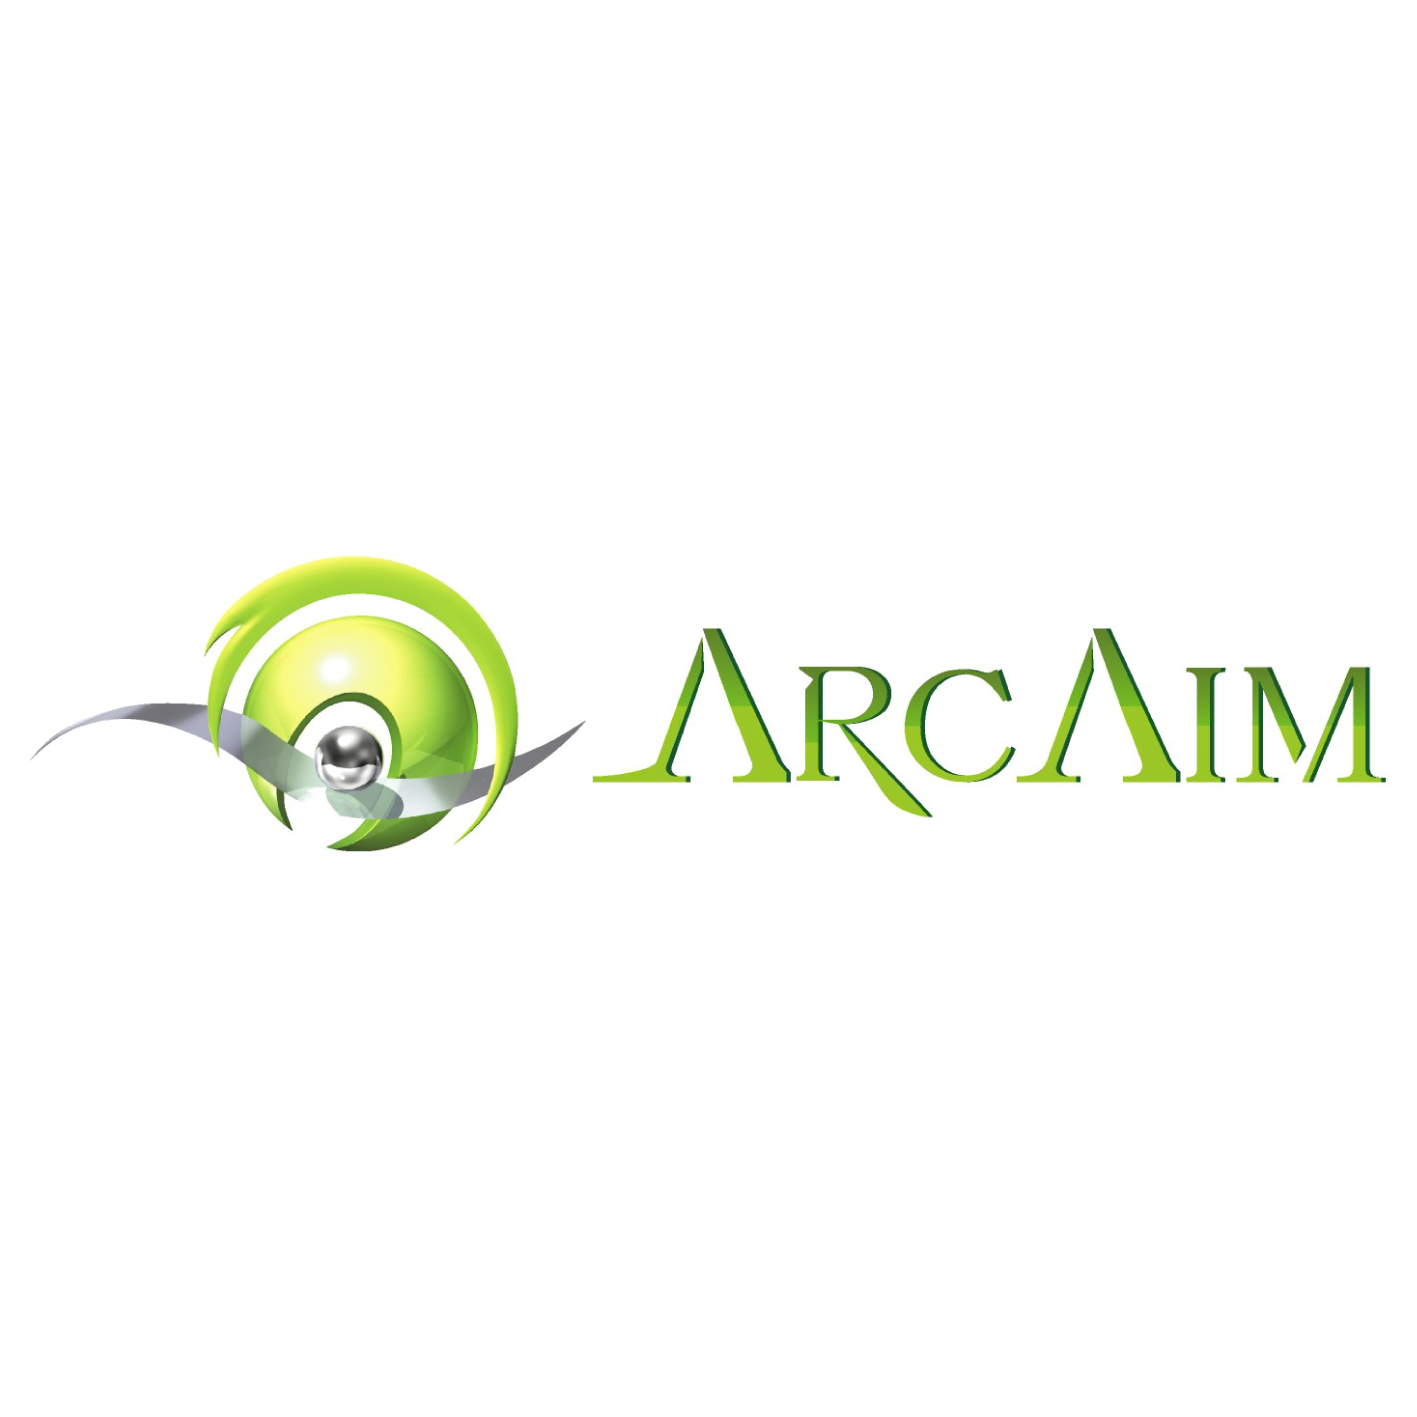 ARCAIM Inc.